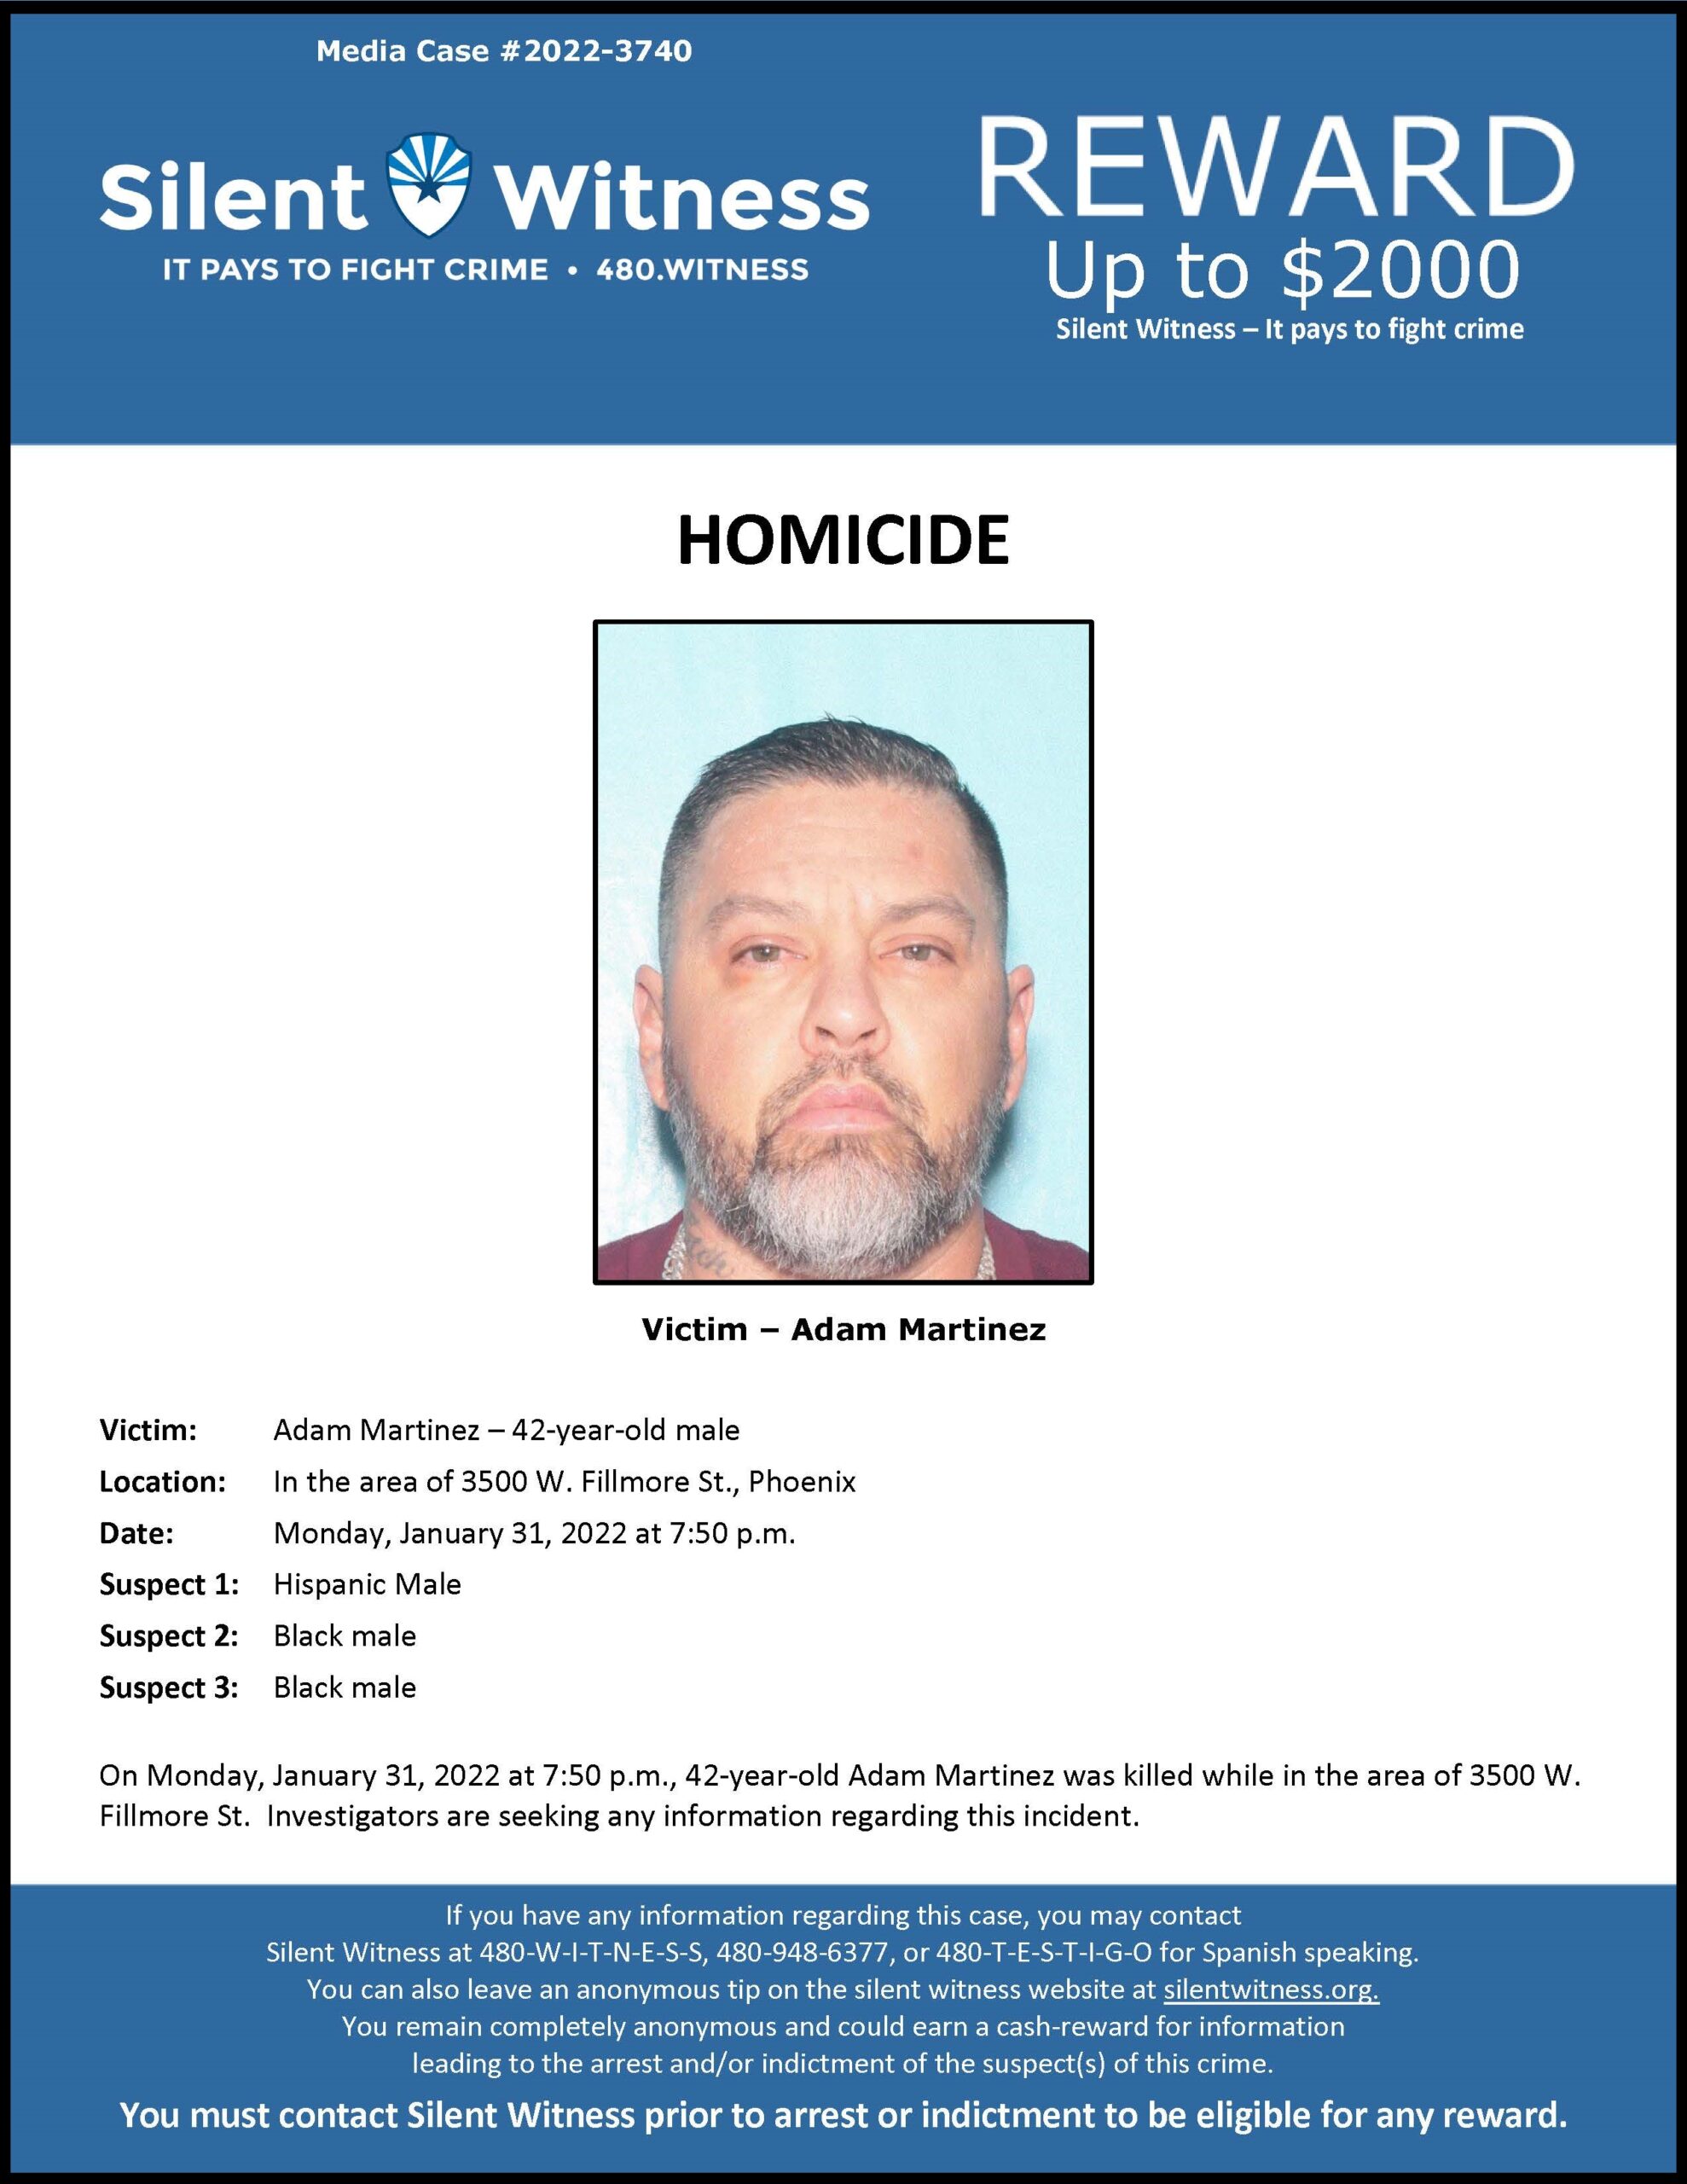 Homicide / Adam Martinez / In the area of 3500 W. Fillmore St., Phoenix